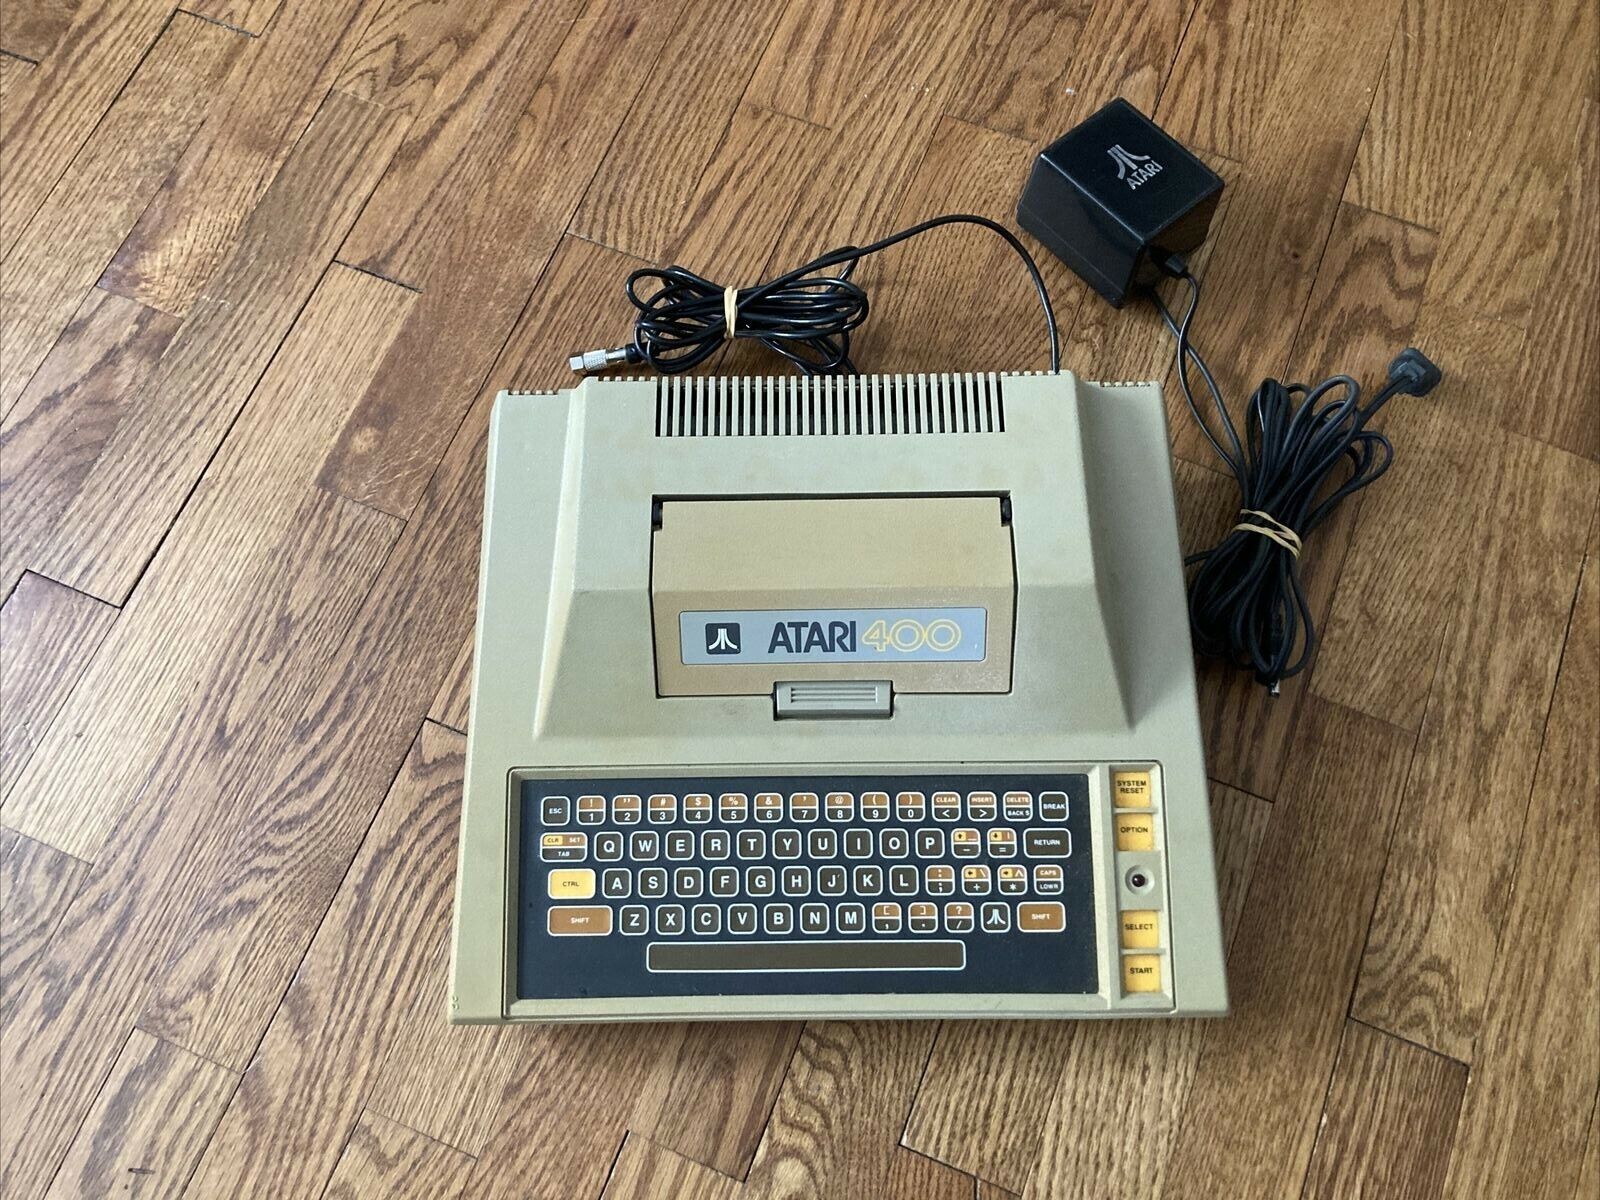 Atari 400 8 Bit Home Computer - Tested & Working